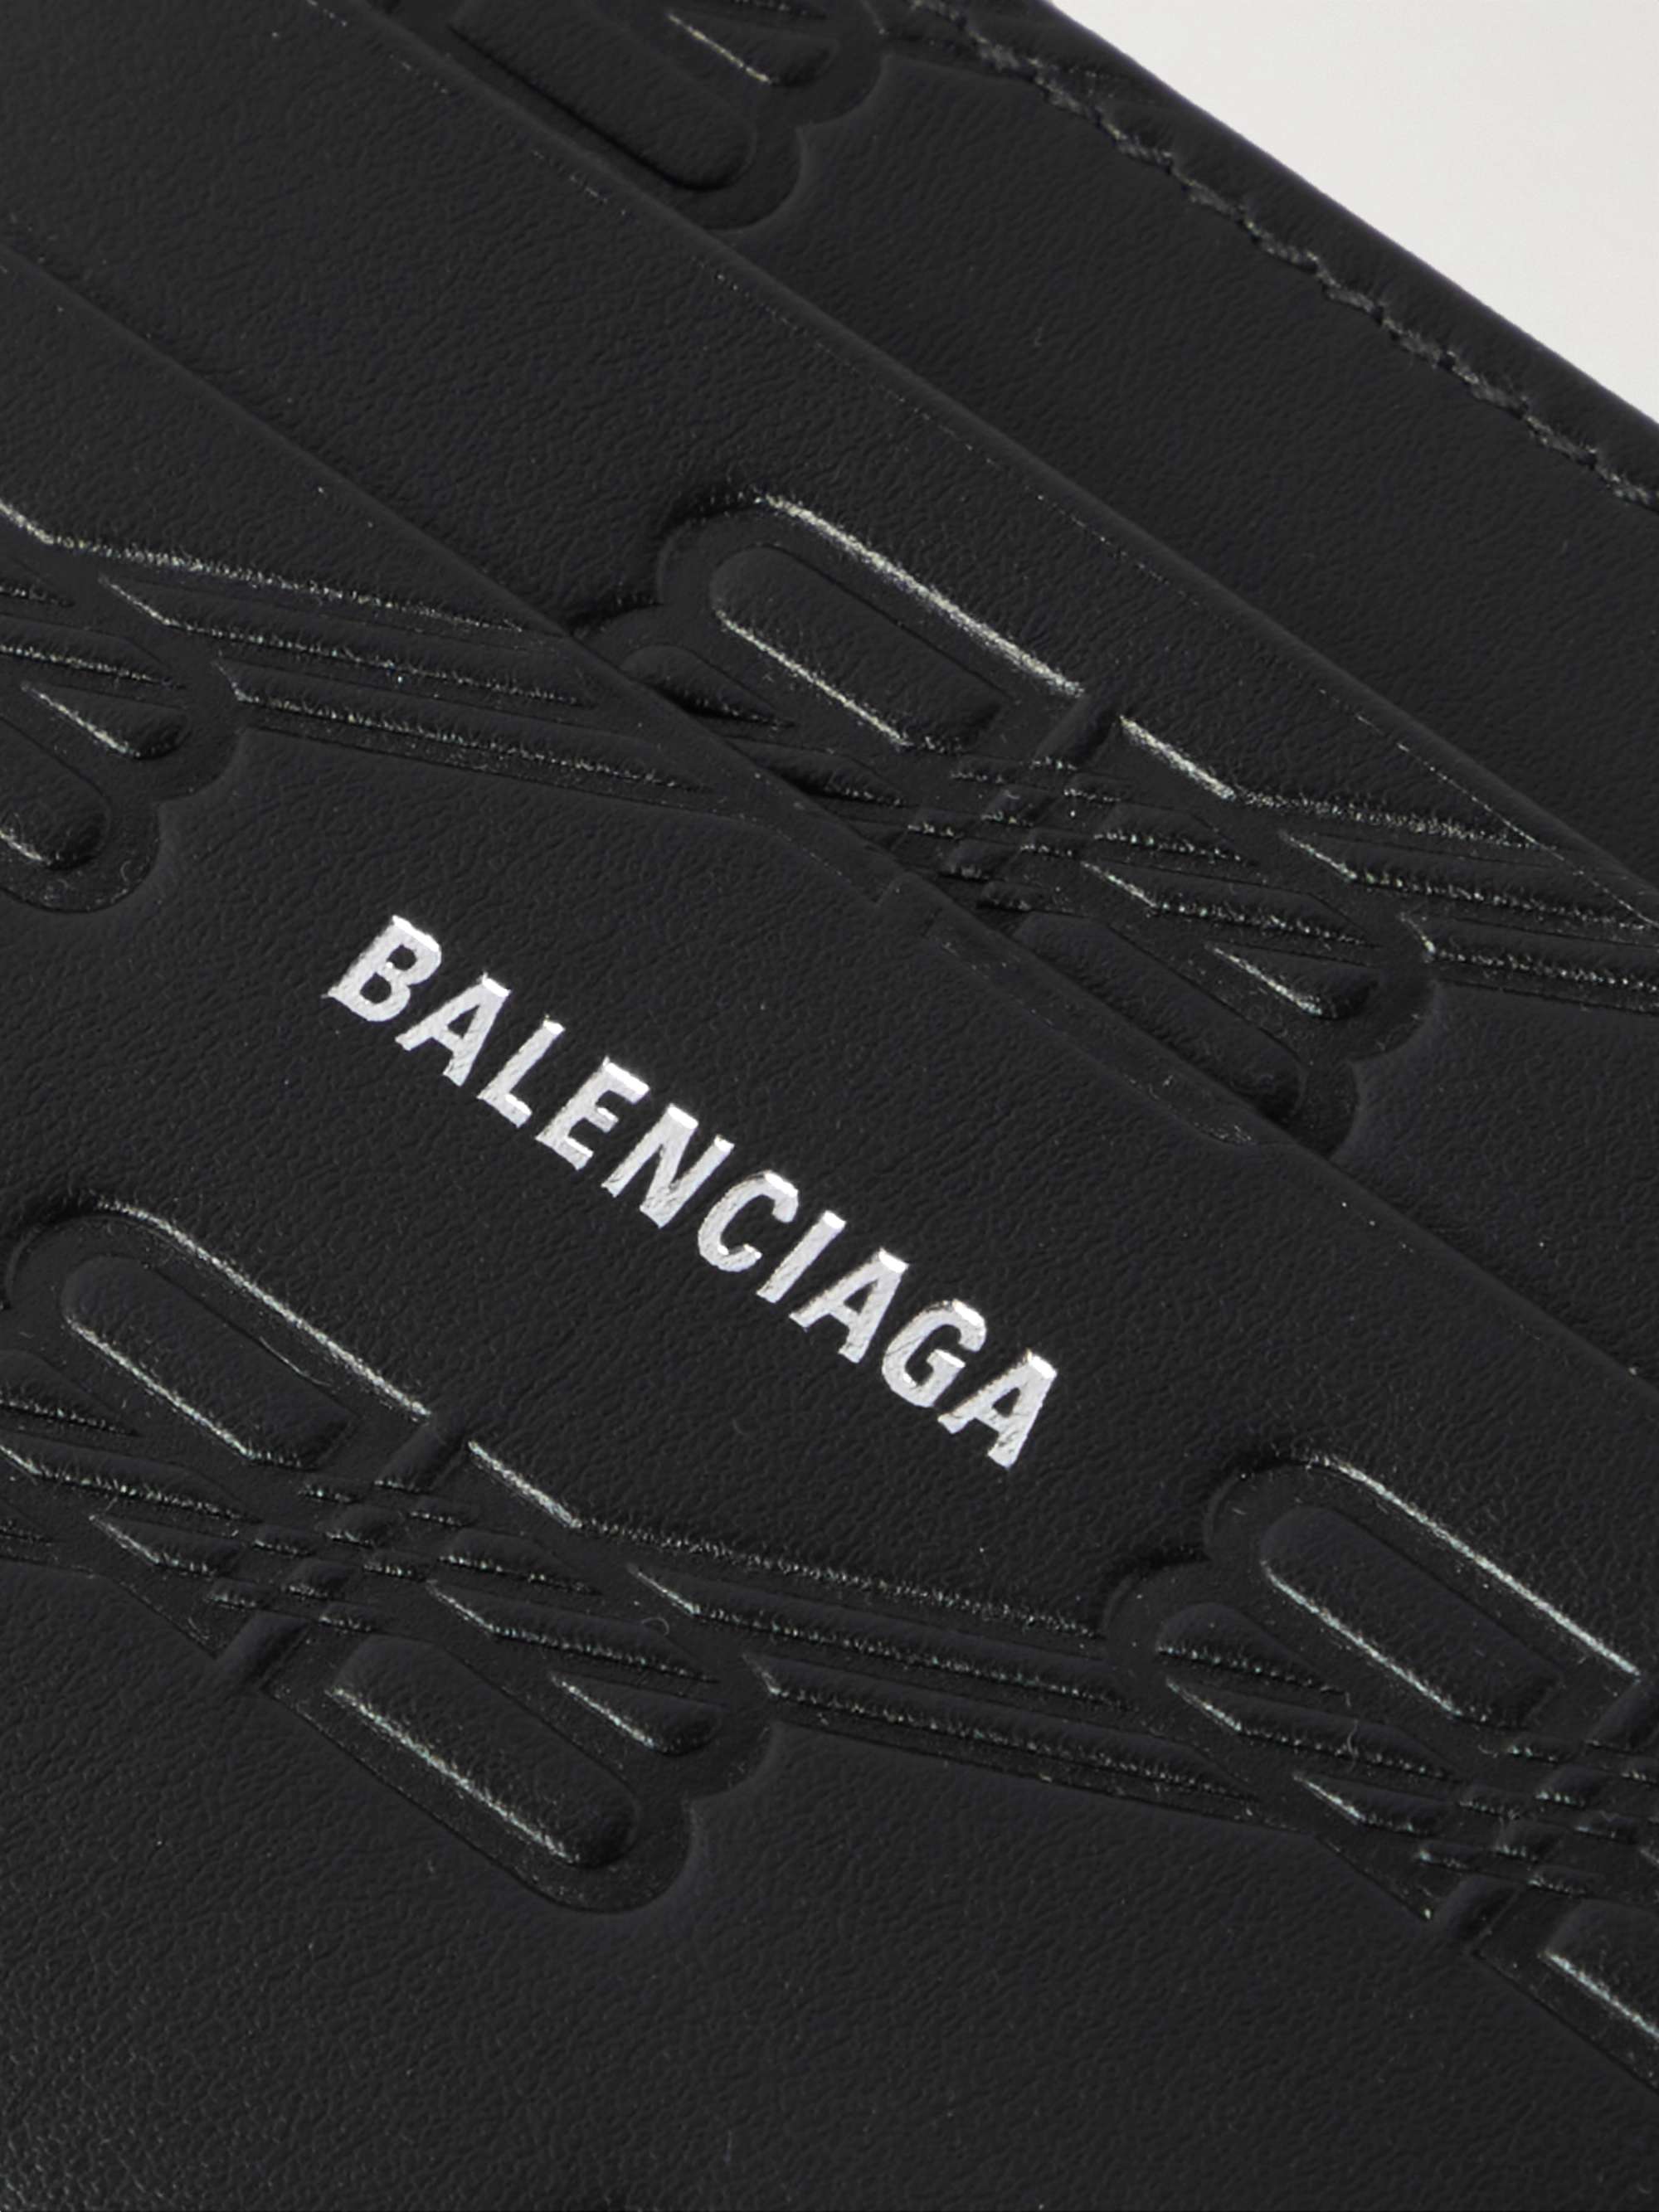 BALENCIAGA Logo-Print Monogrammed Leather Cardholder